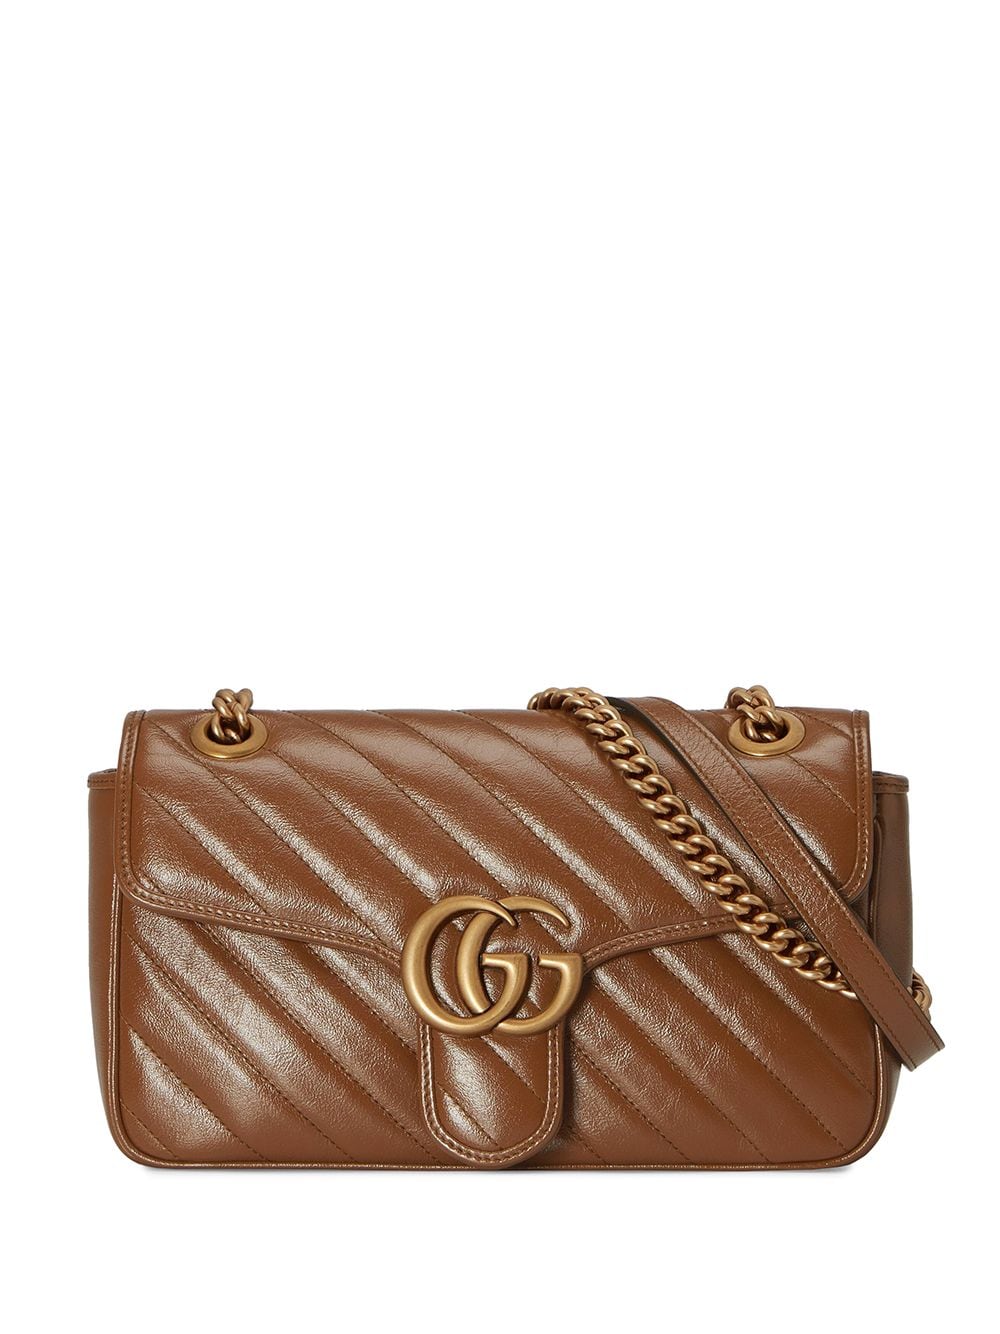 Gucci Small GG Marmont Matelassé Shoulder Bag